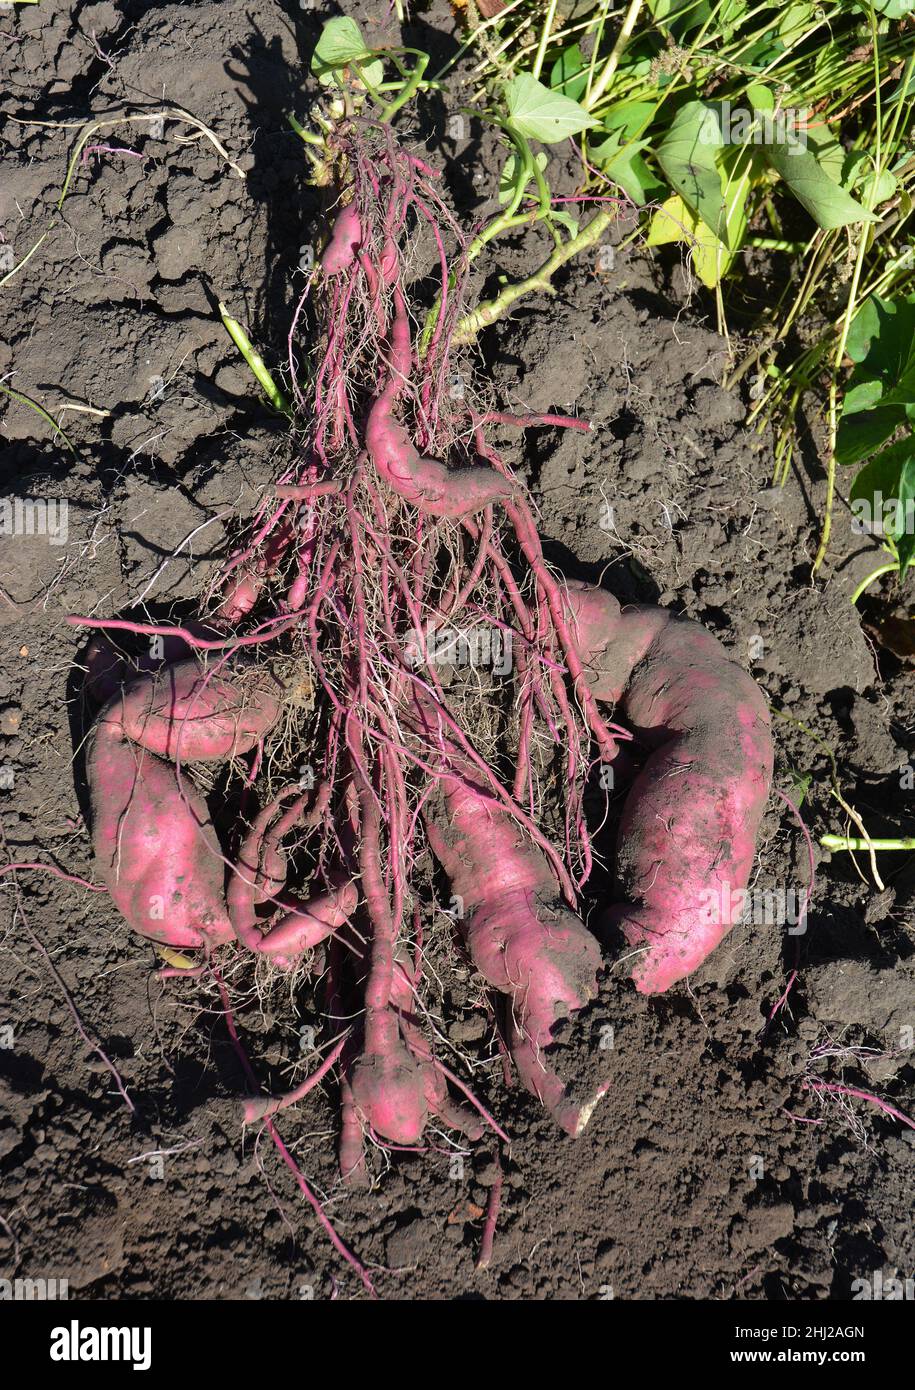 sweet potato roots